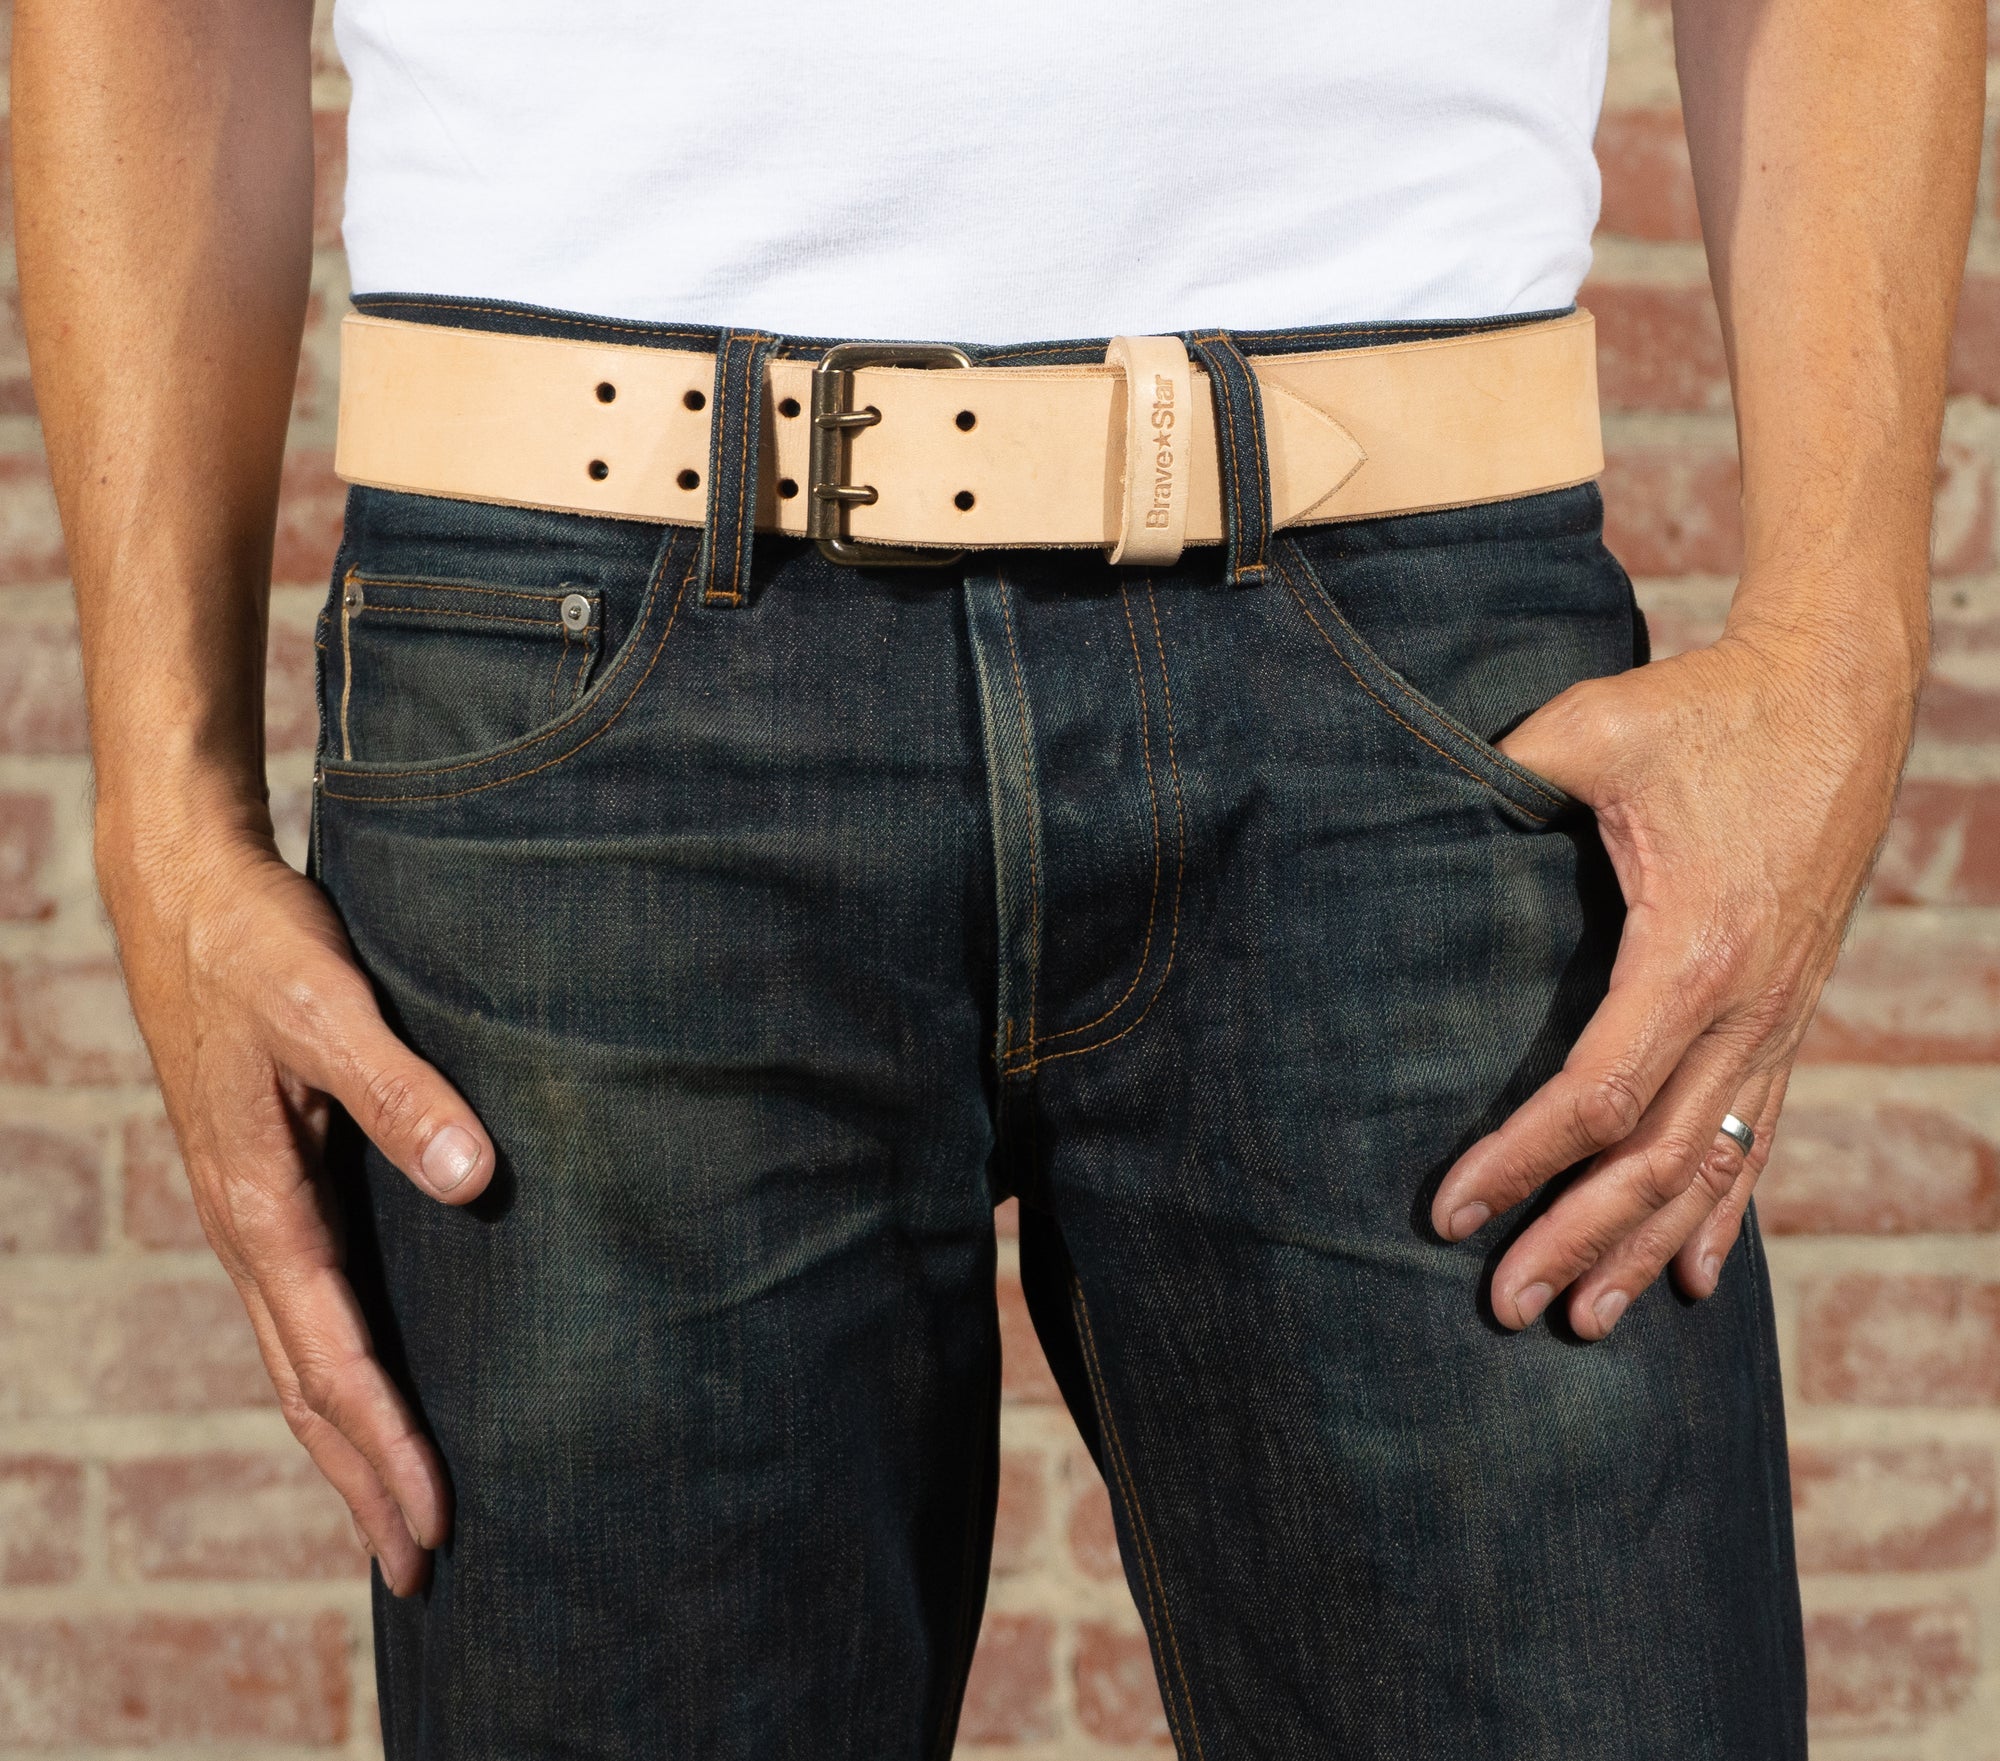 1.75 inch Leather Jean Belt